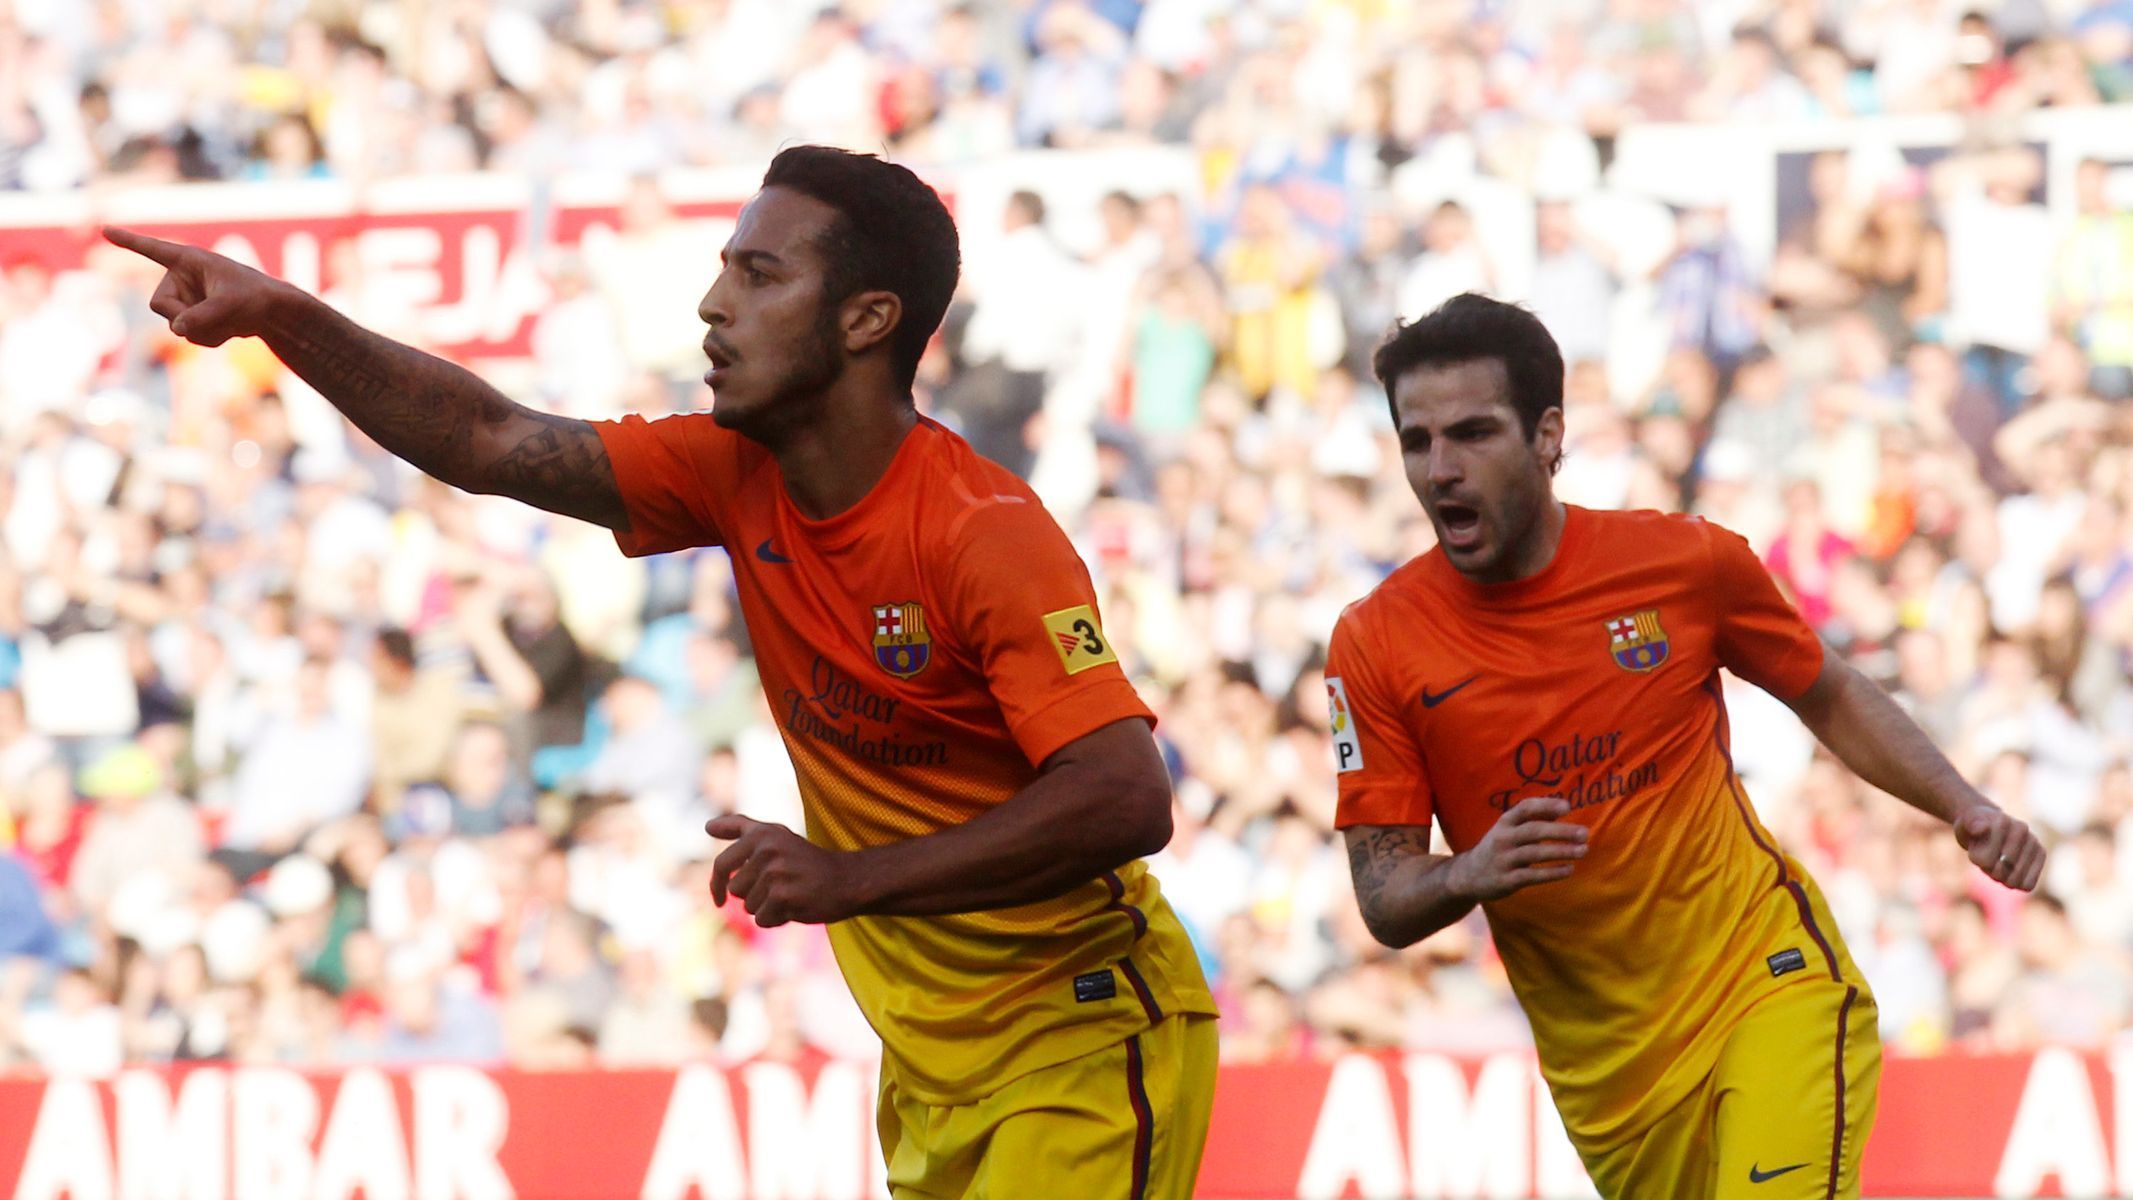 Alcantara a Fabregas slaví gól do sítě Zaragozy